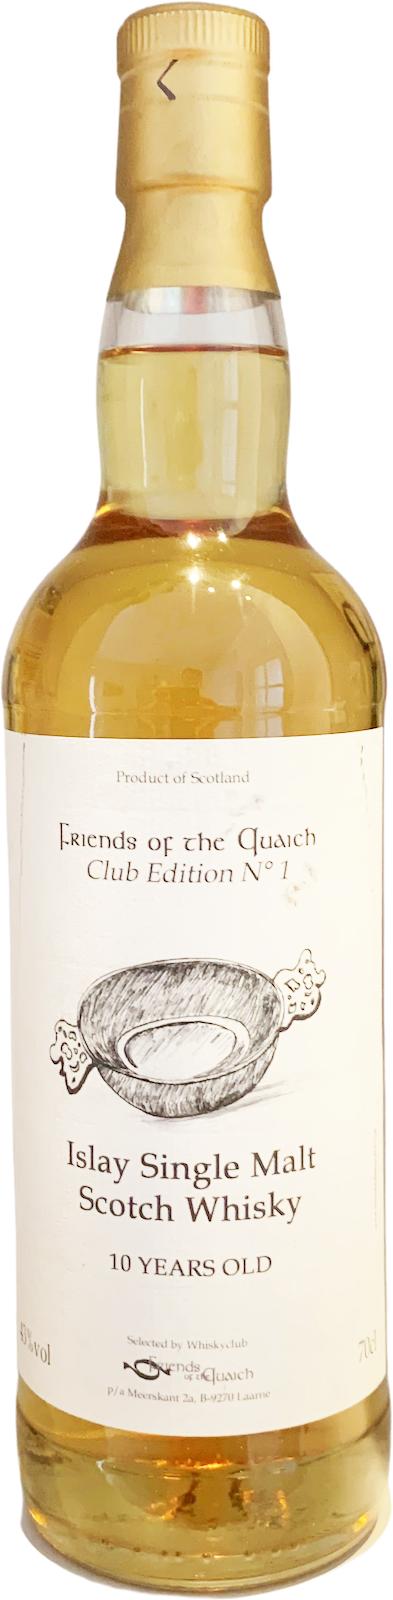 Islay Single Malt Scotch Whisky 10yo UD Bourbon Friends of the Quaich 43% 700ml